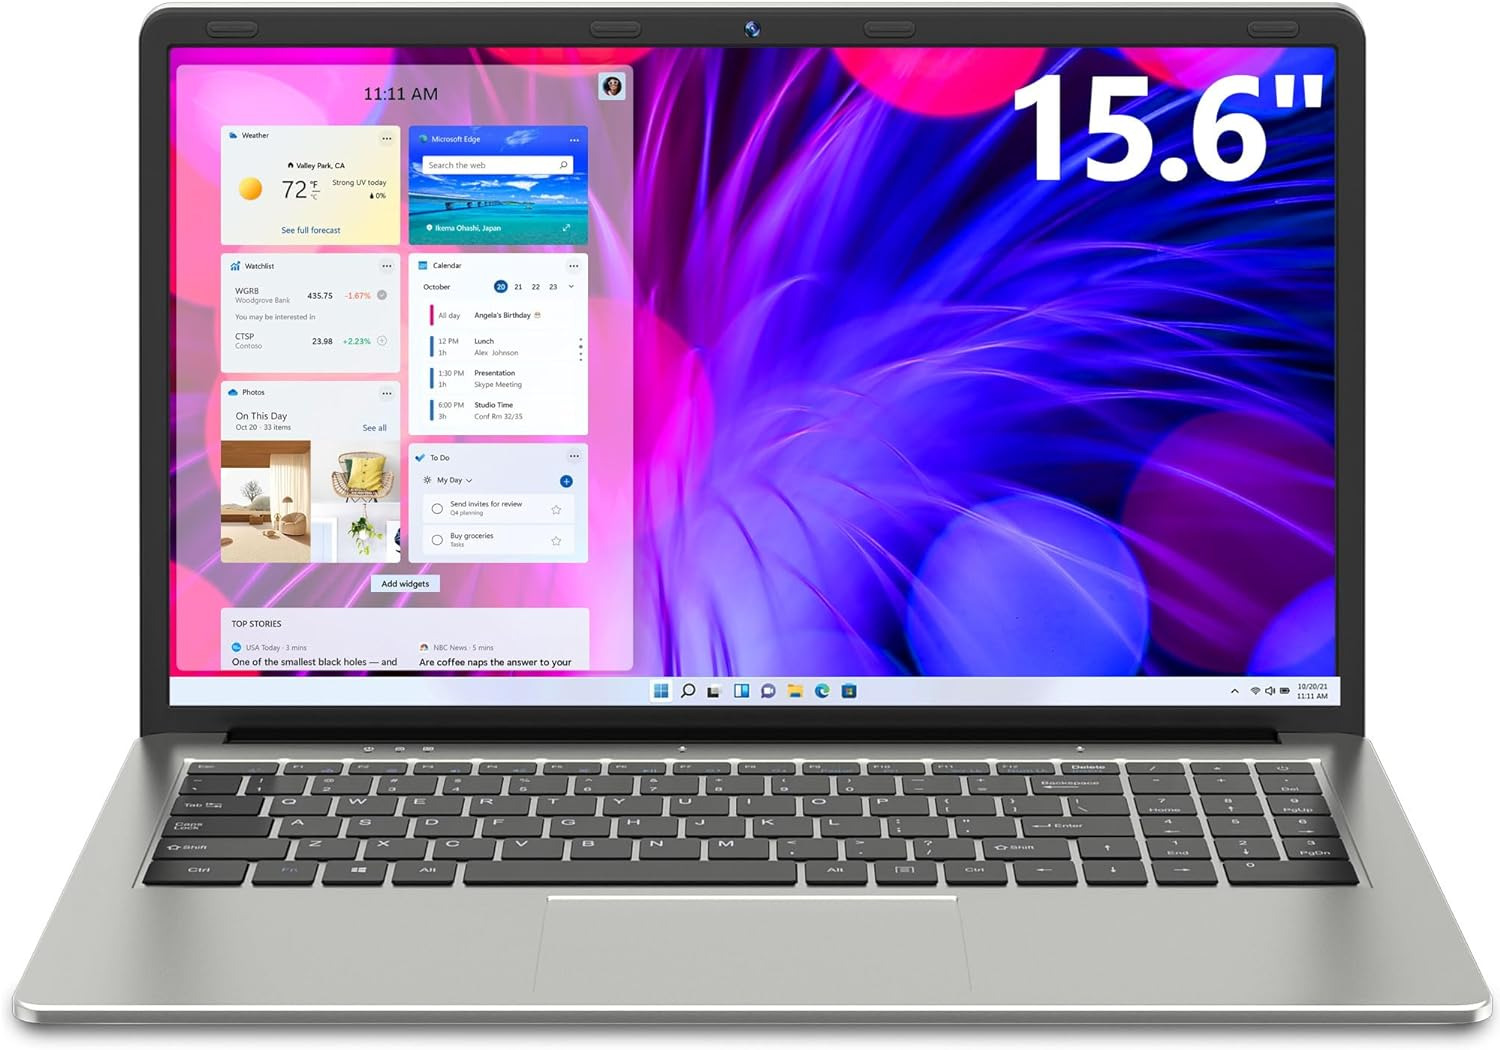 SGIN 15.6 Inch Laptop 4GB RAM 128GB SSD Computer with 2.4G/5G WiFi Mini HDMI USB